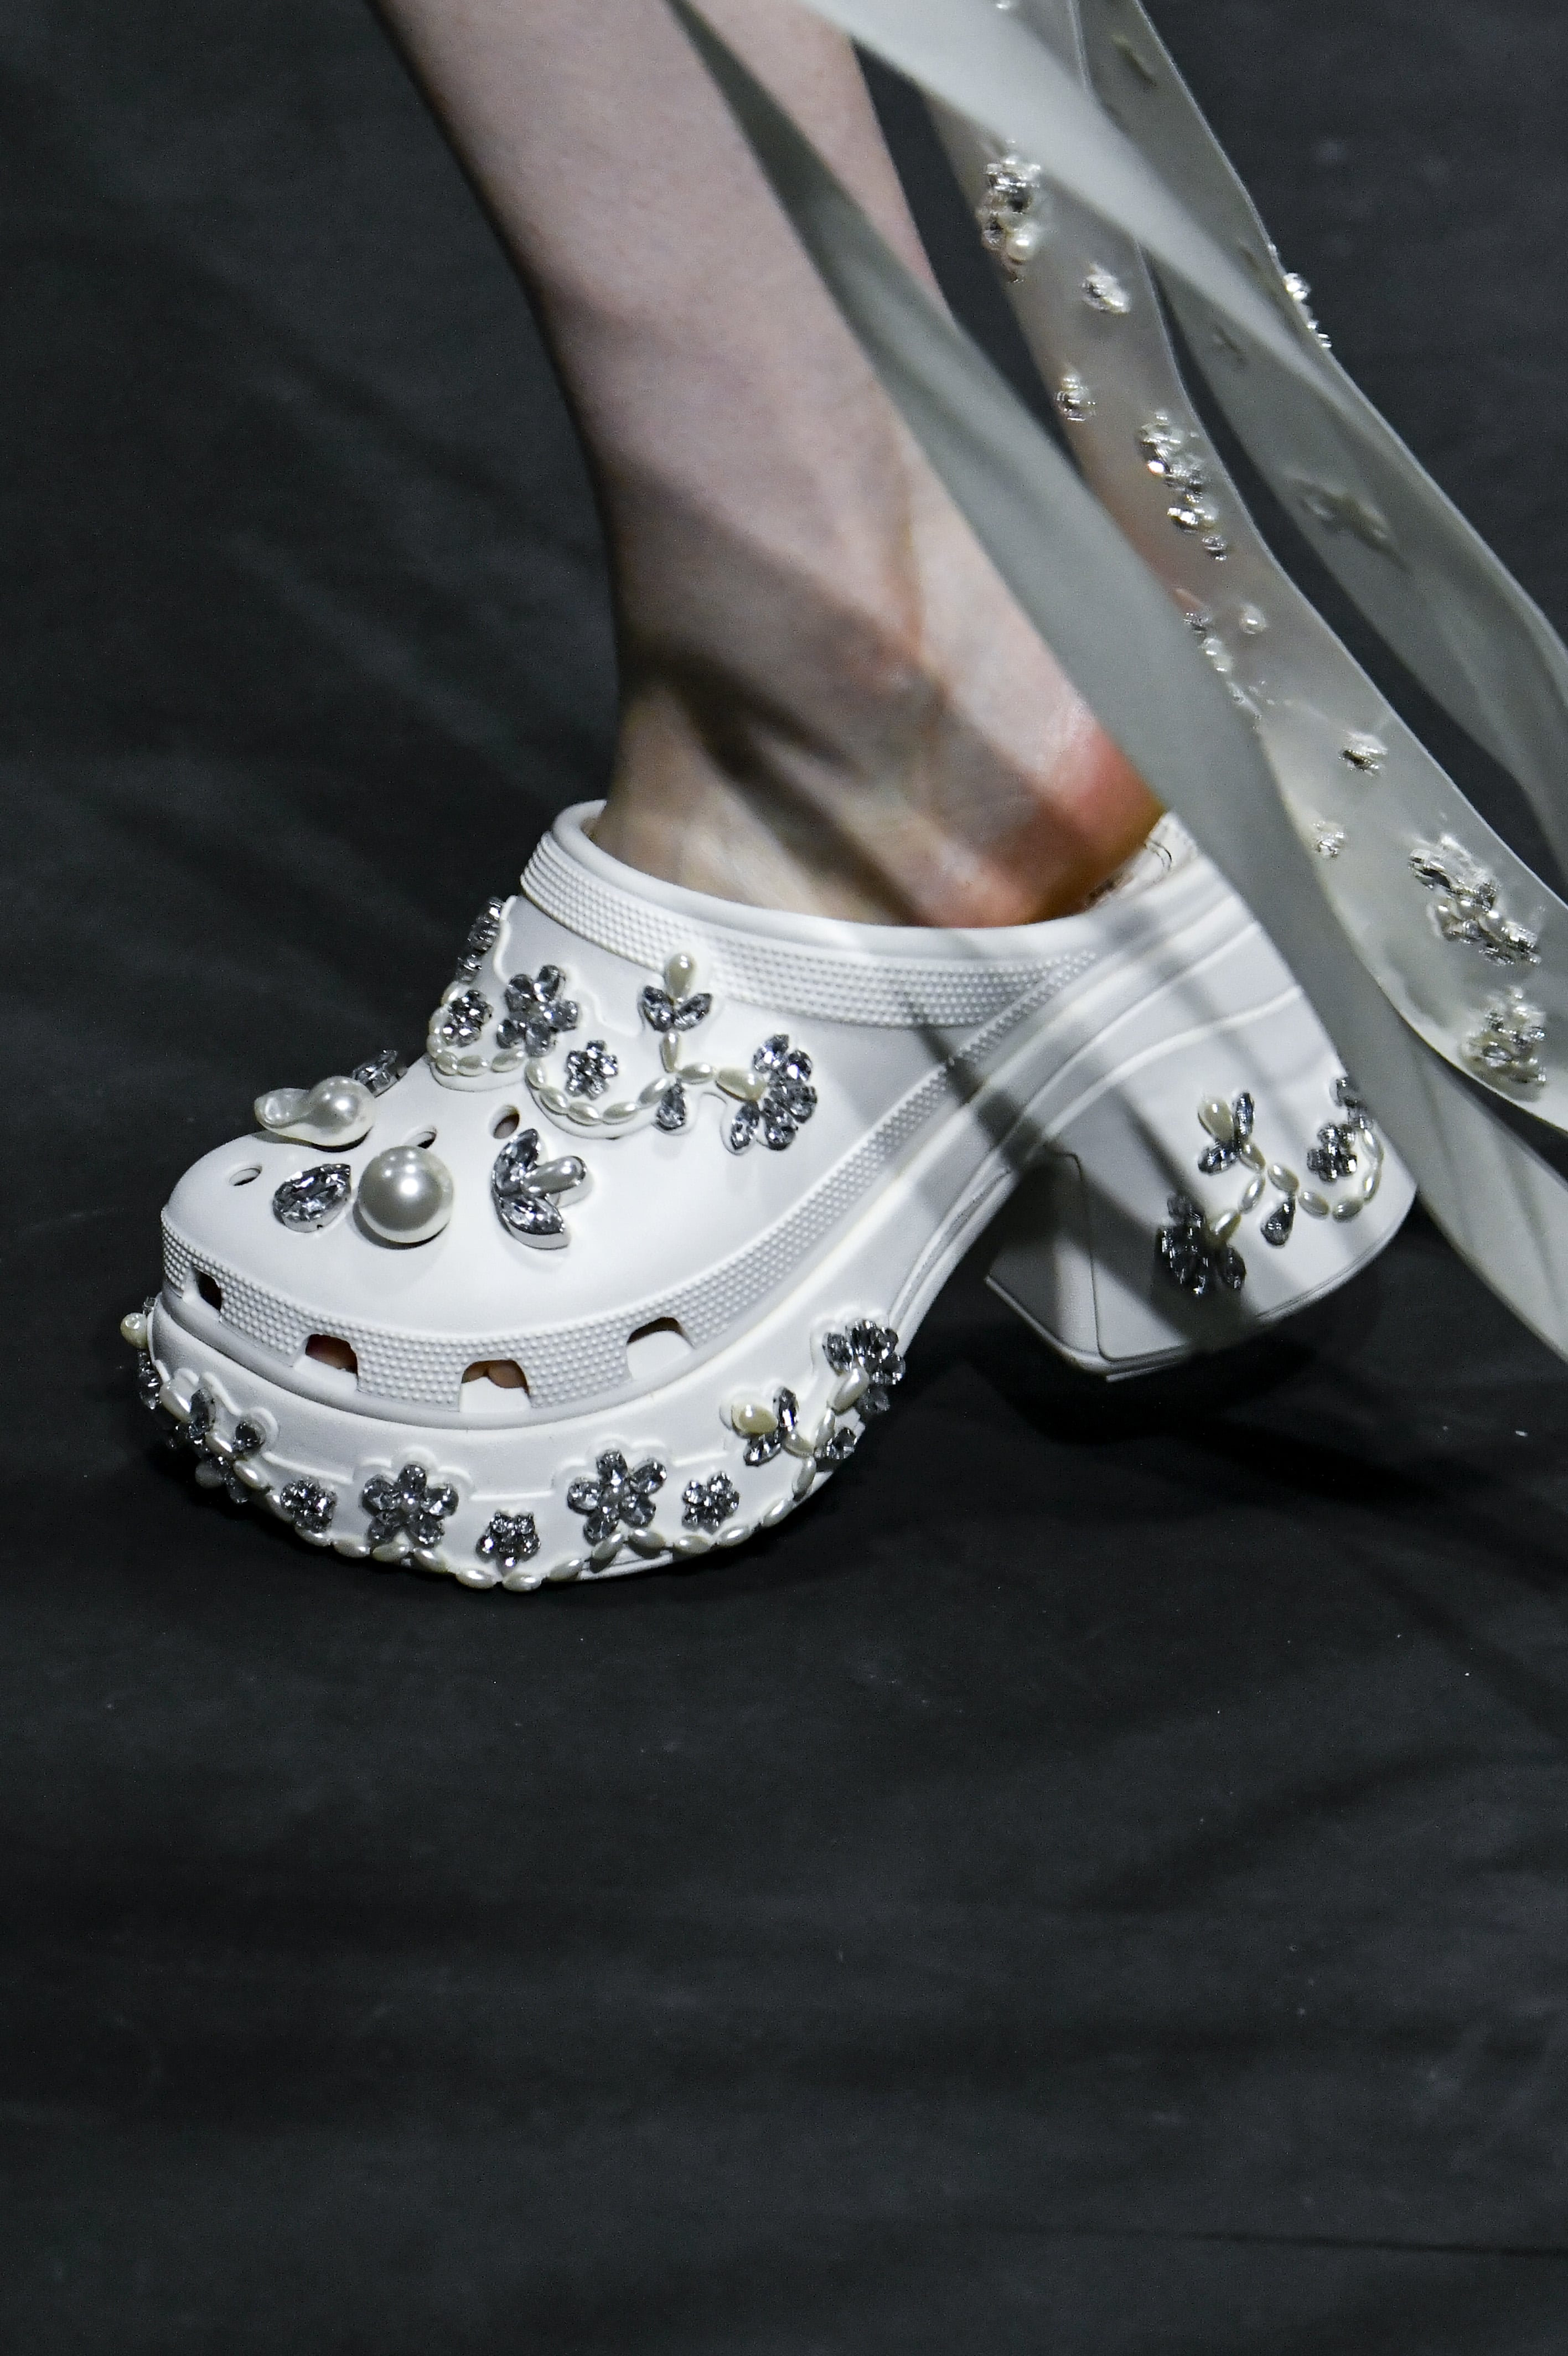 Simone Rocha's Crocs Collaboration at London Fashion Week